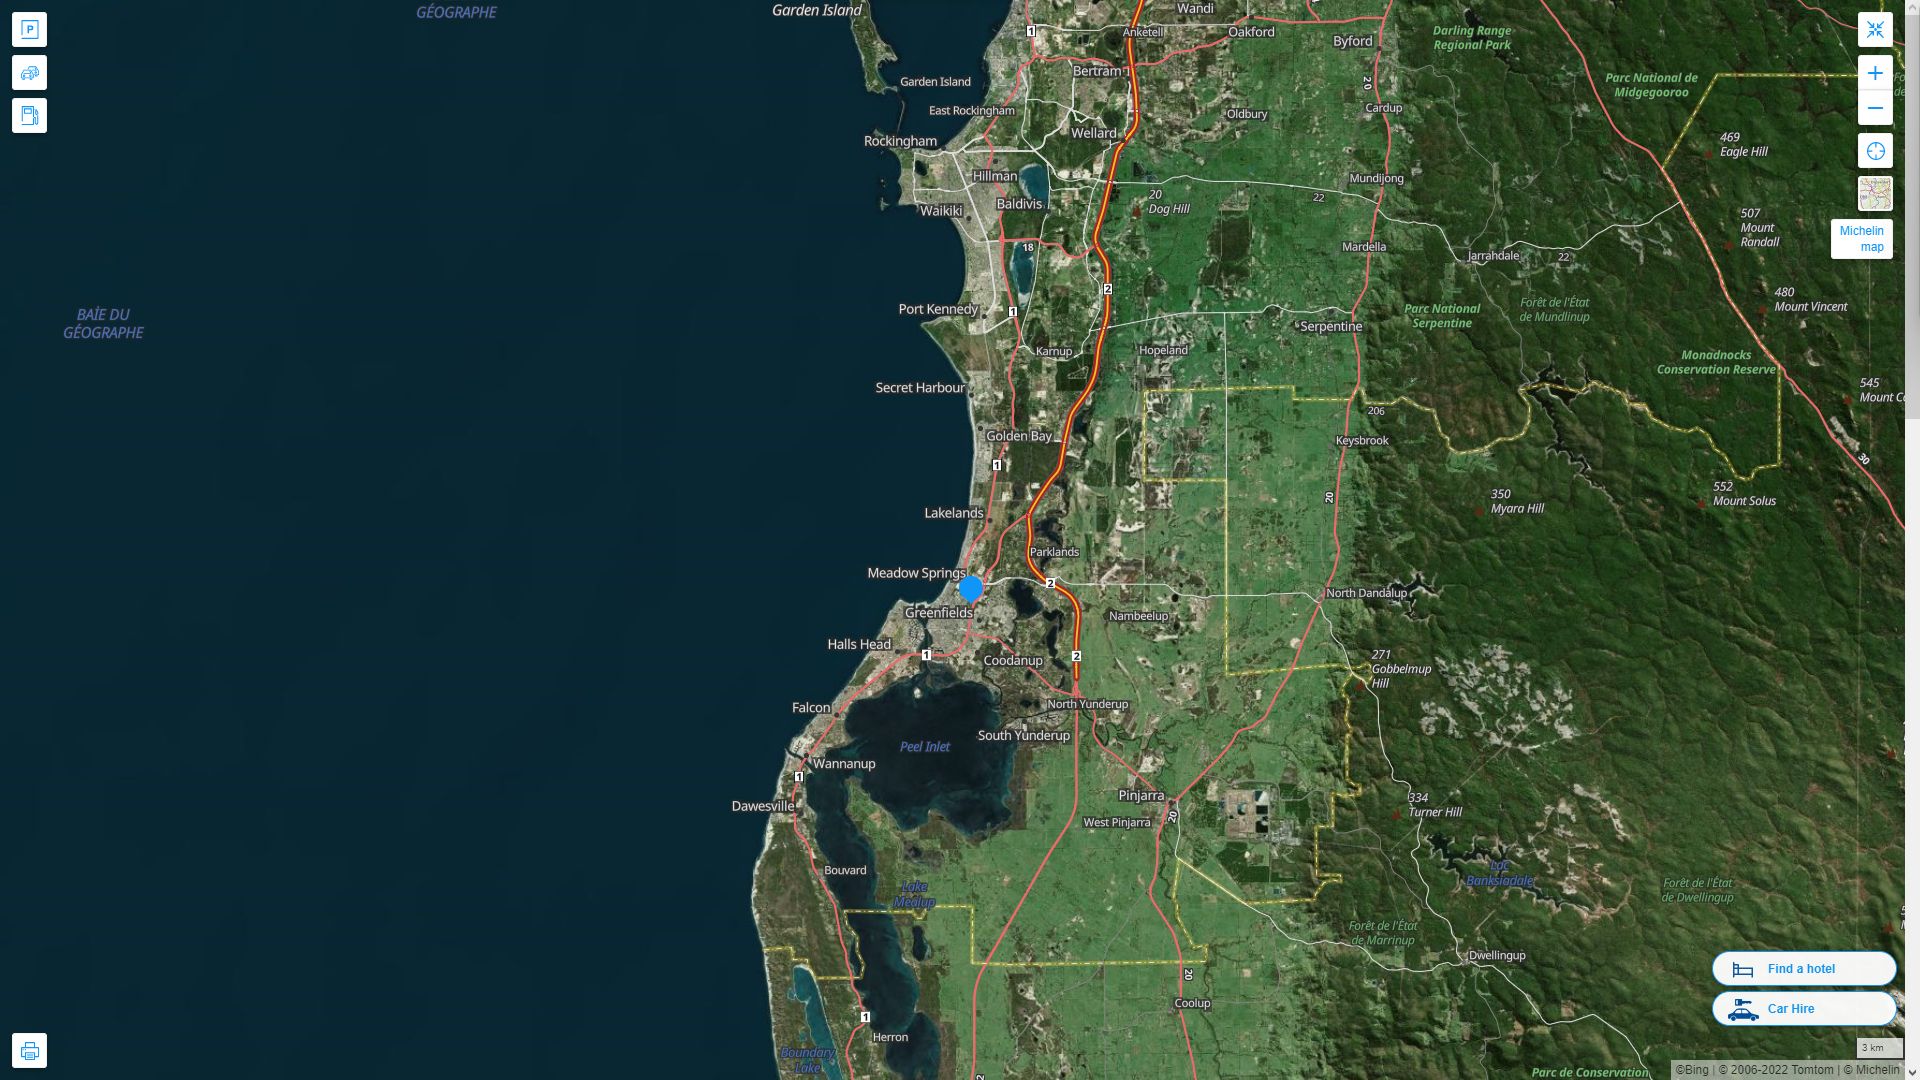 Mandurah Highway and Road Map with Satellite View